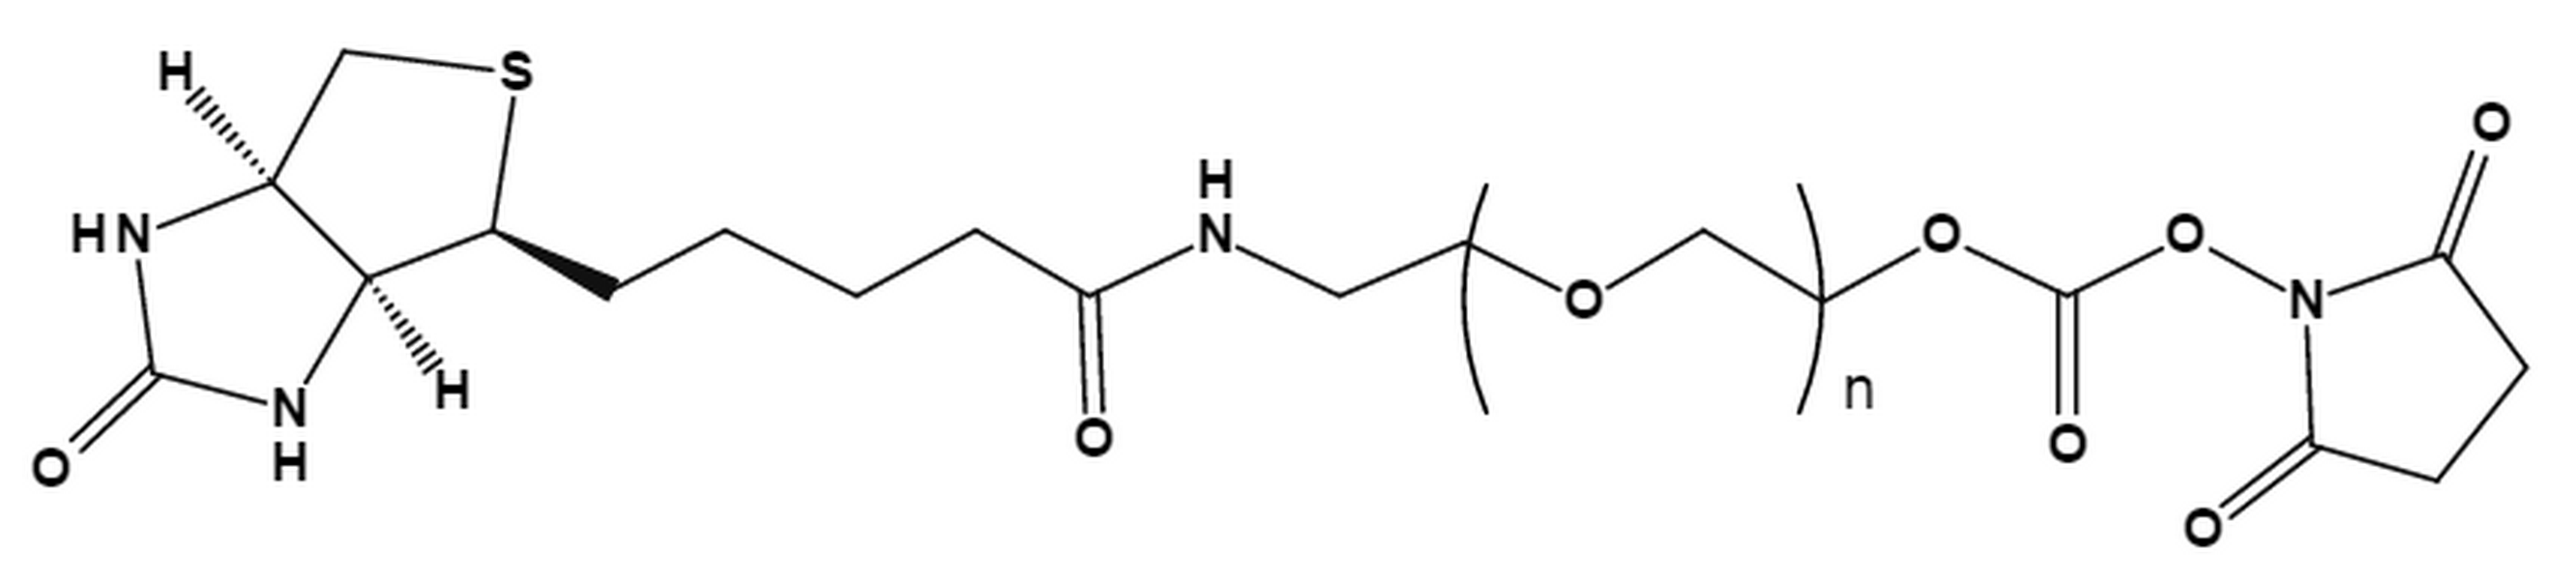 Biotin-PEG-Succinimidyl Carbonate, MW 5,000